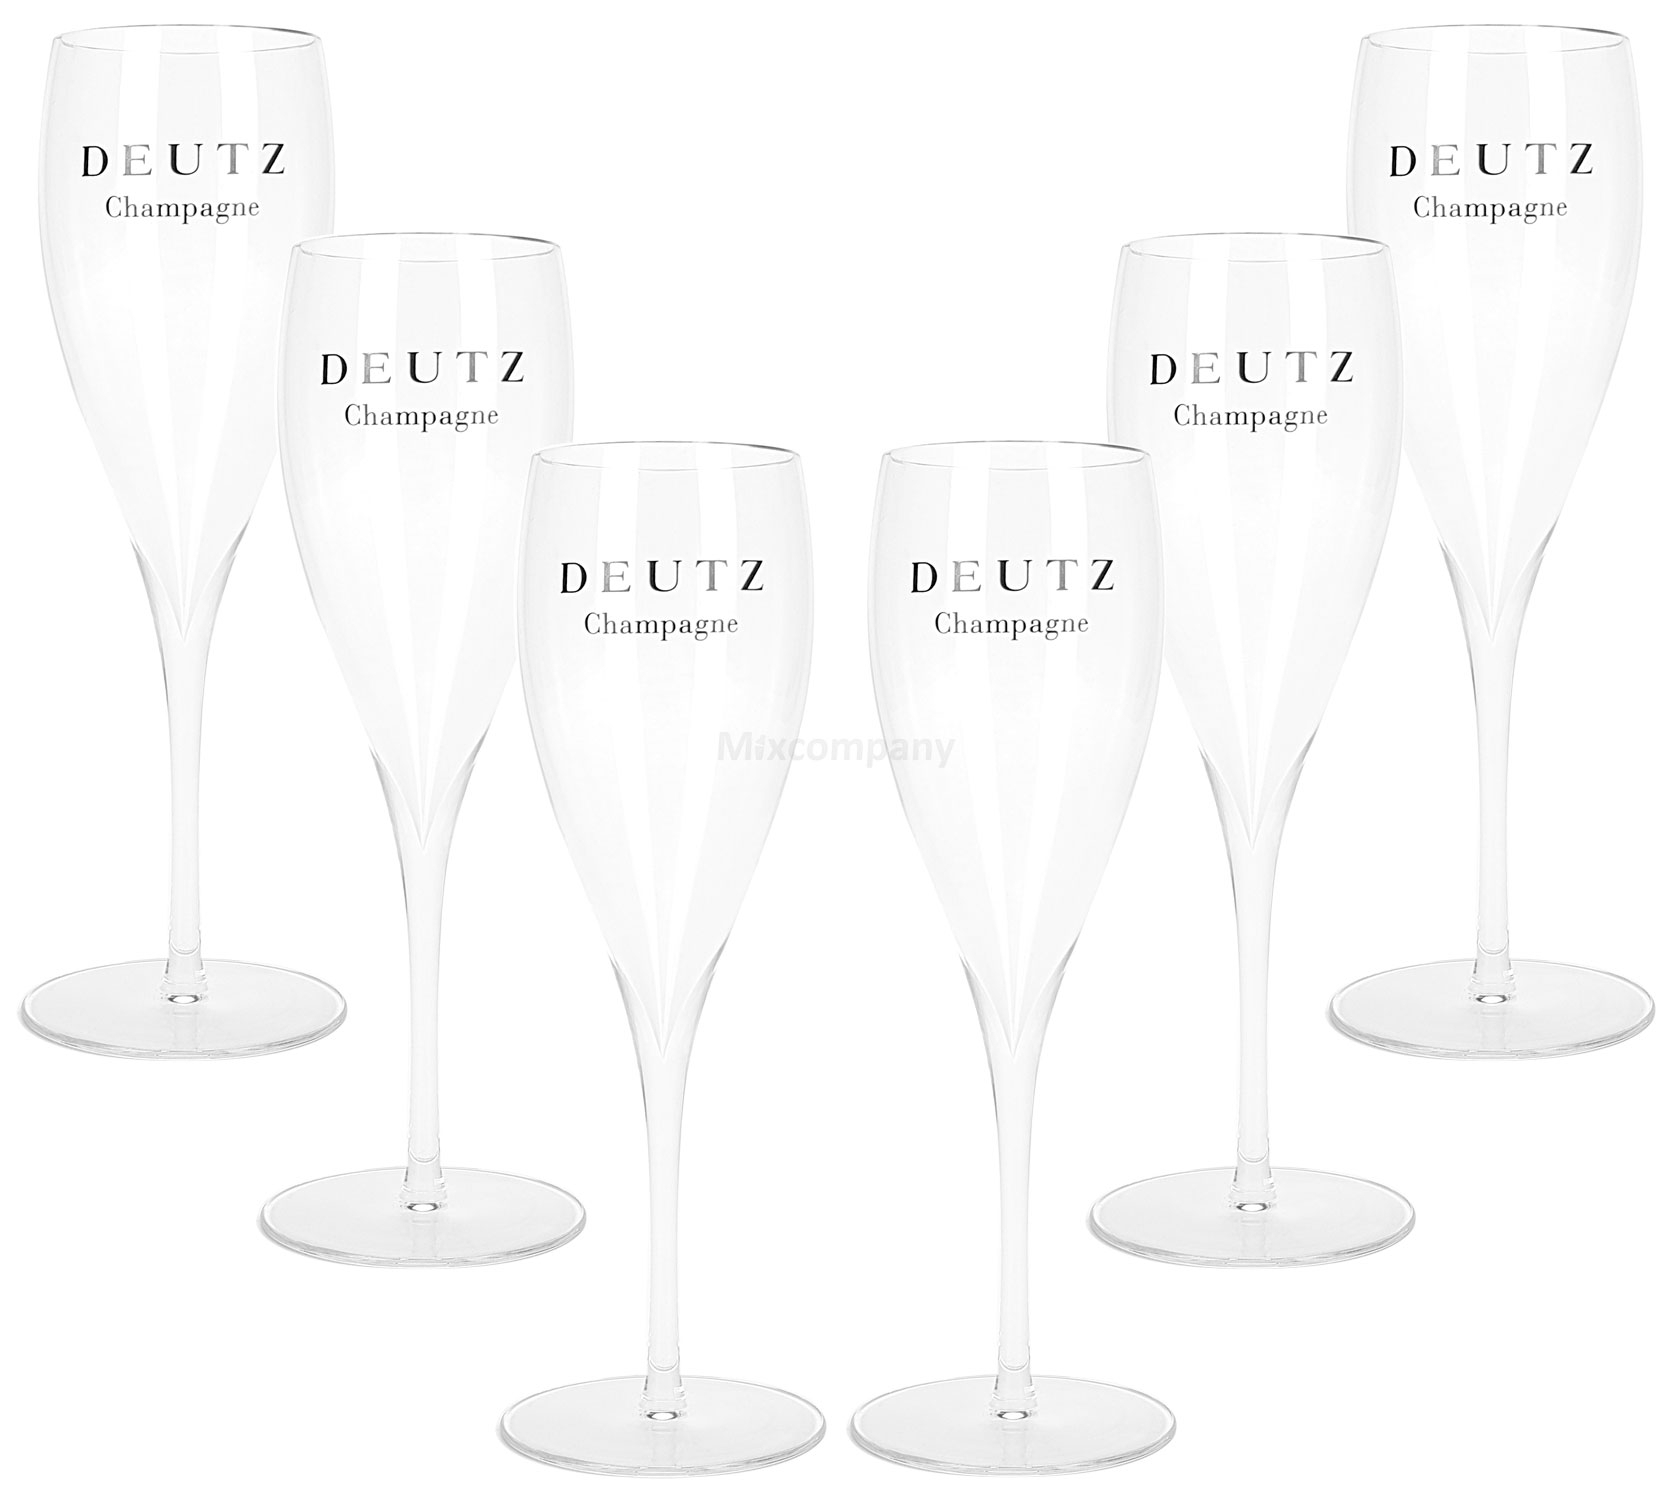 Deutz Champagne Champagner Prosecco Sekt Glas Gläser Set - 6x Champagnergläser